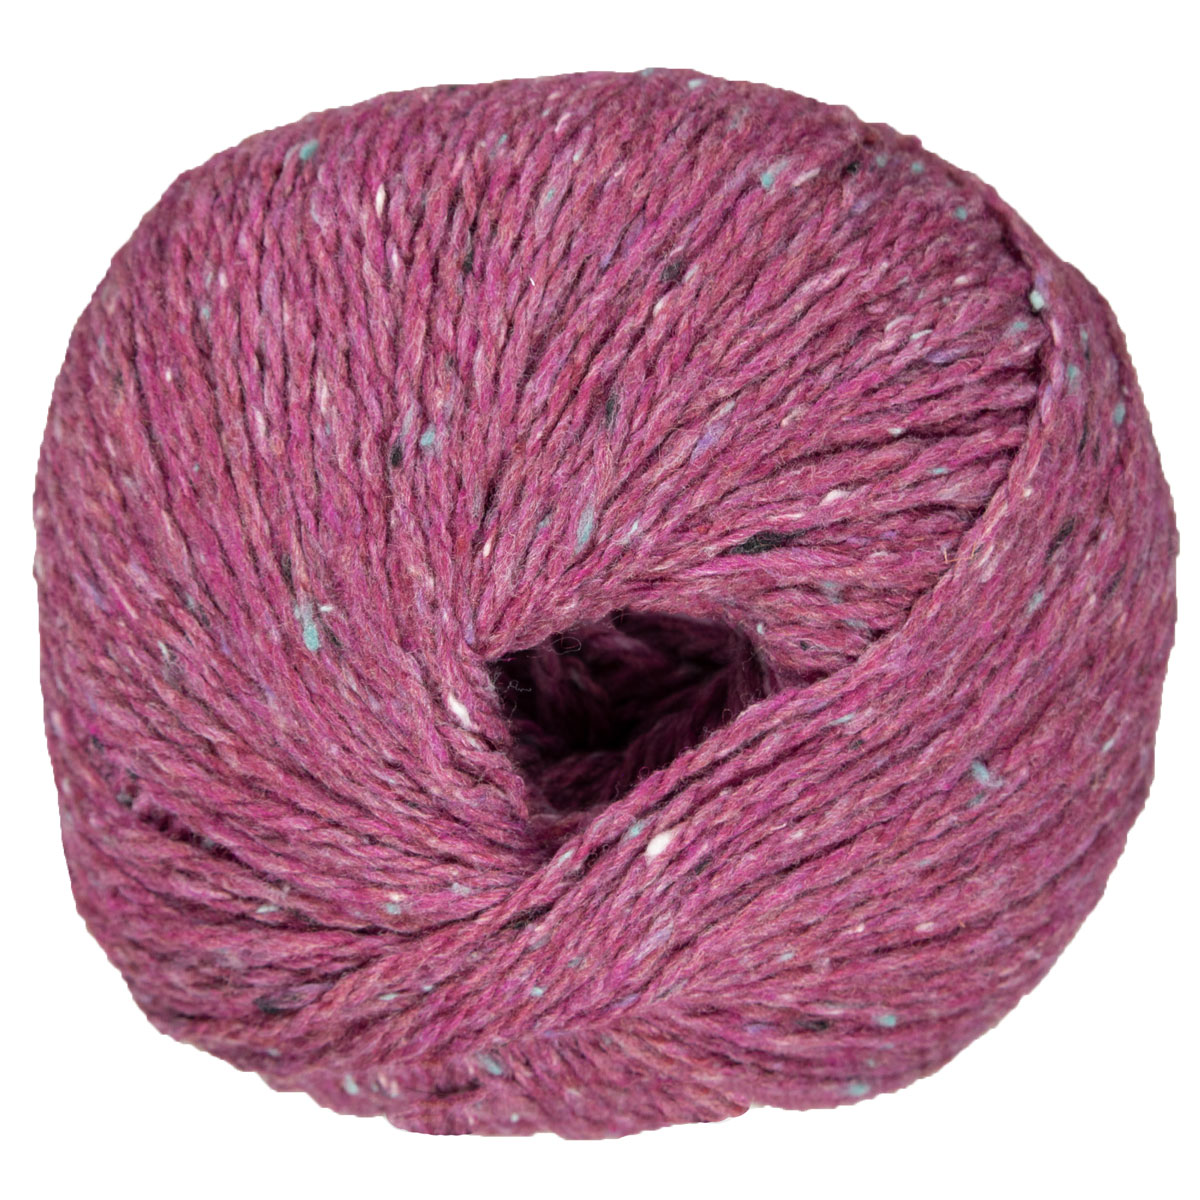 Wool Yarn Scheepjes Terrazzo - Primavera 709